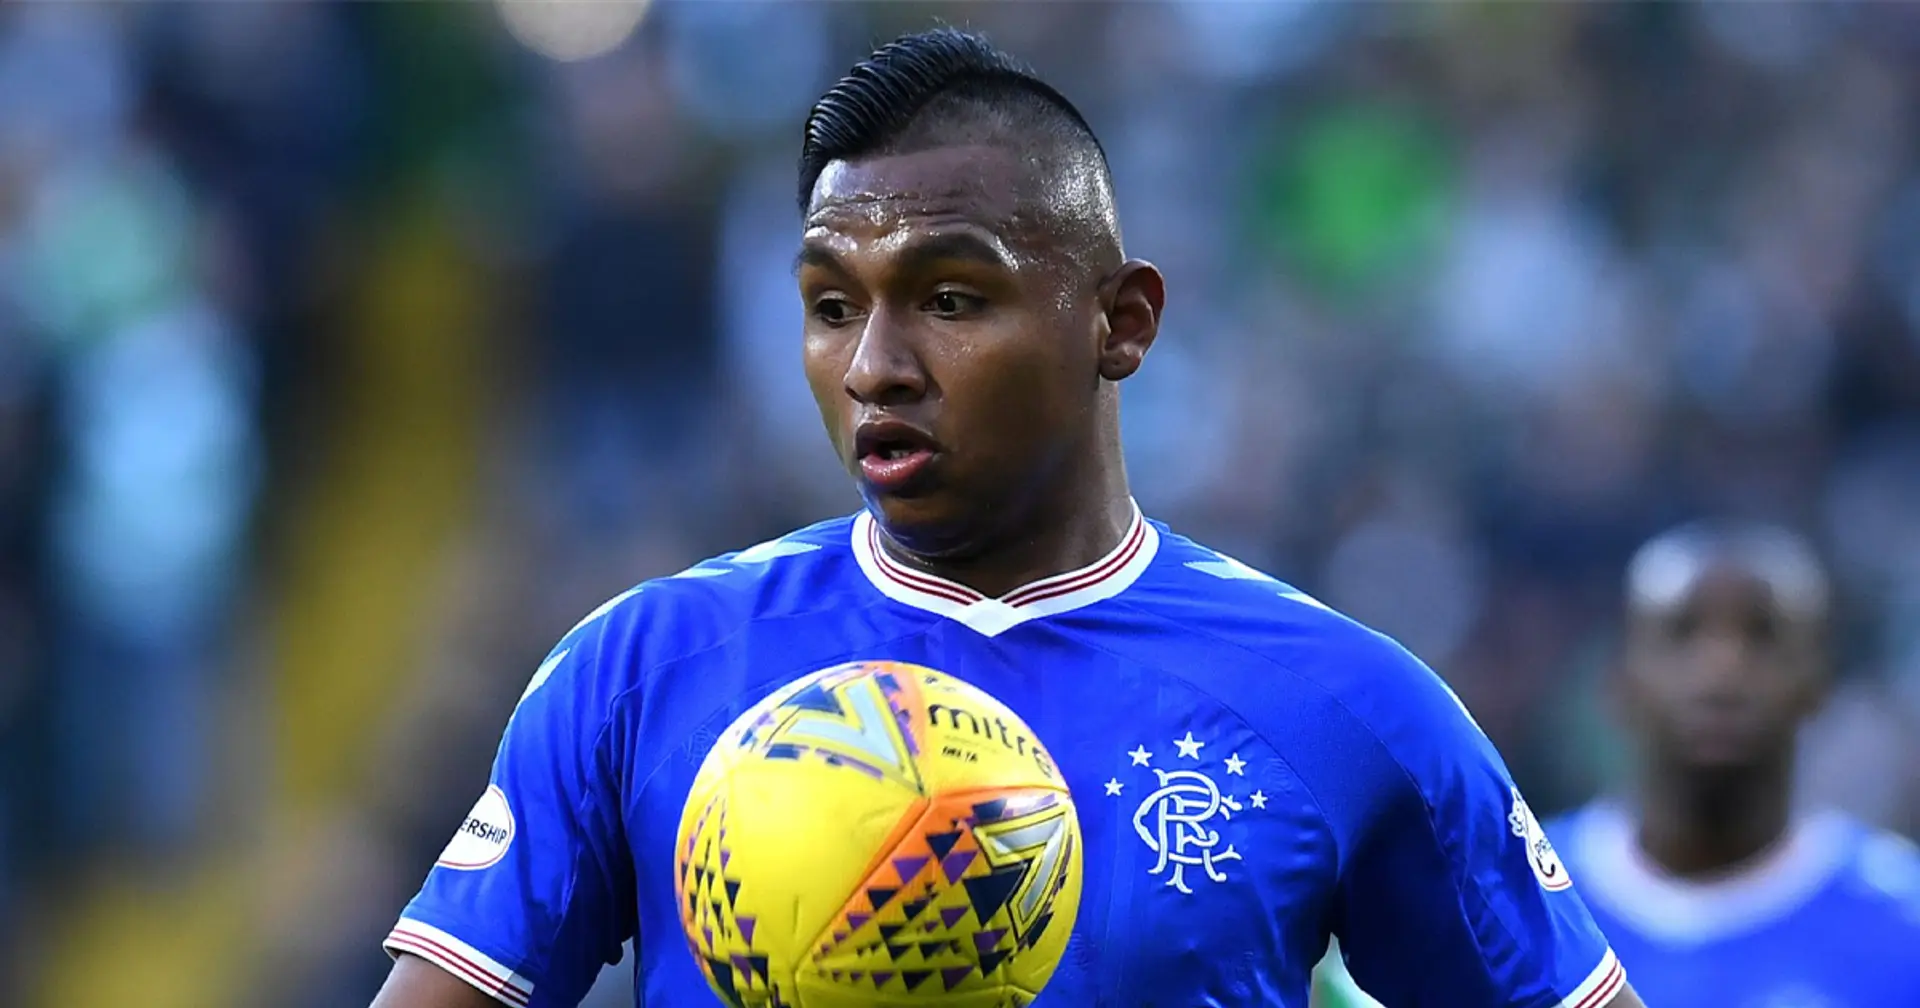 Sky Sports: Police investigate as Rangers striker Morelos suffers racial abuse on social media